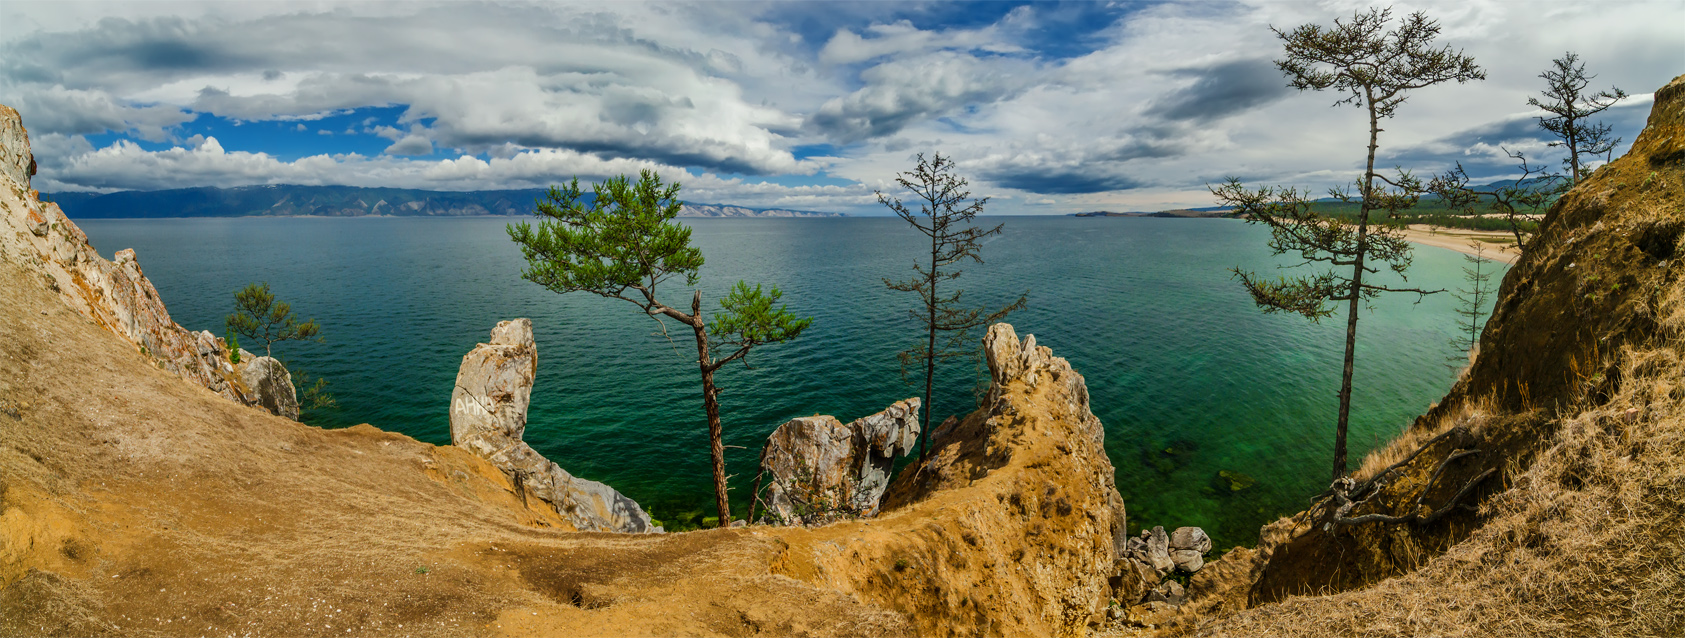 Байкал панорама лето